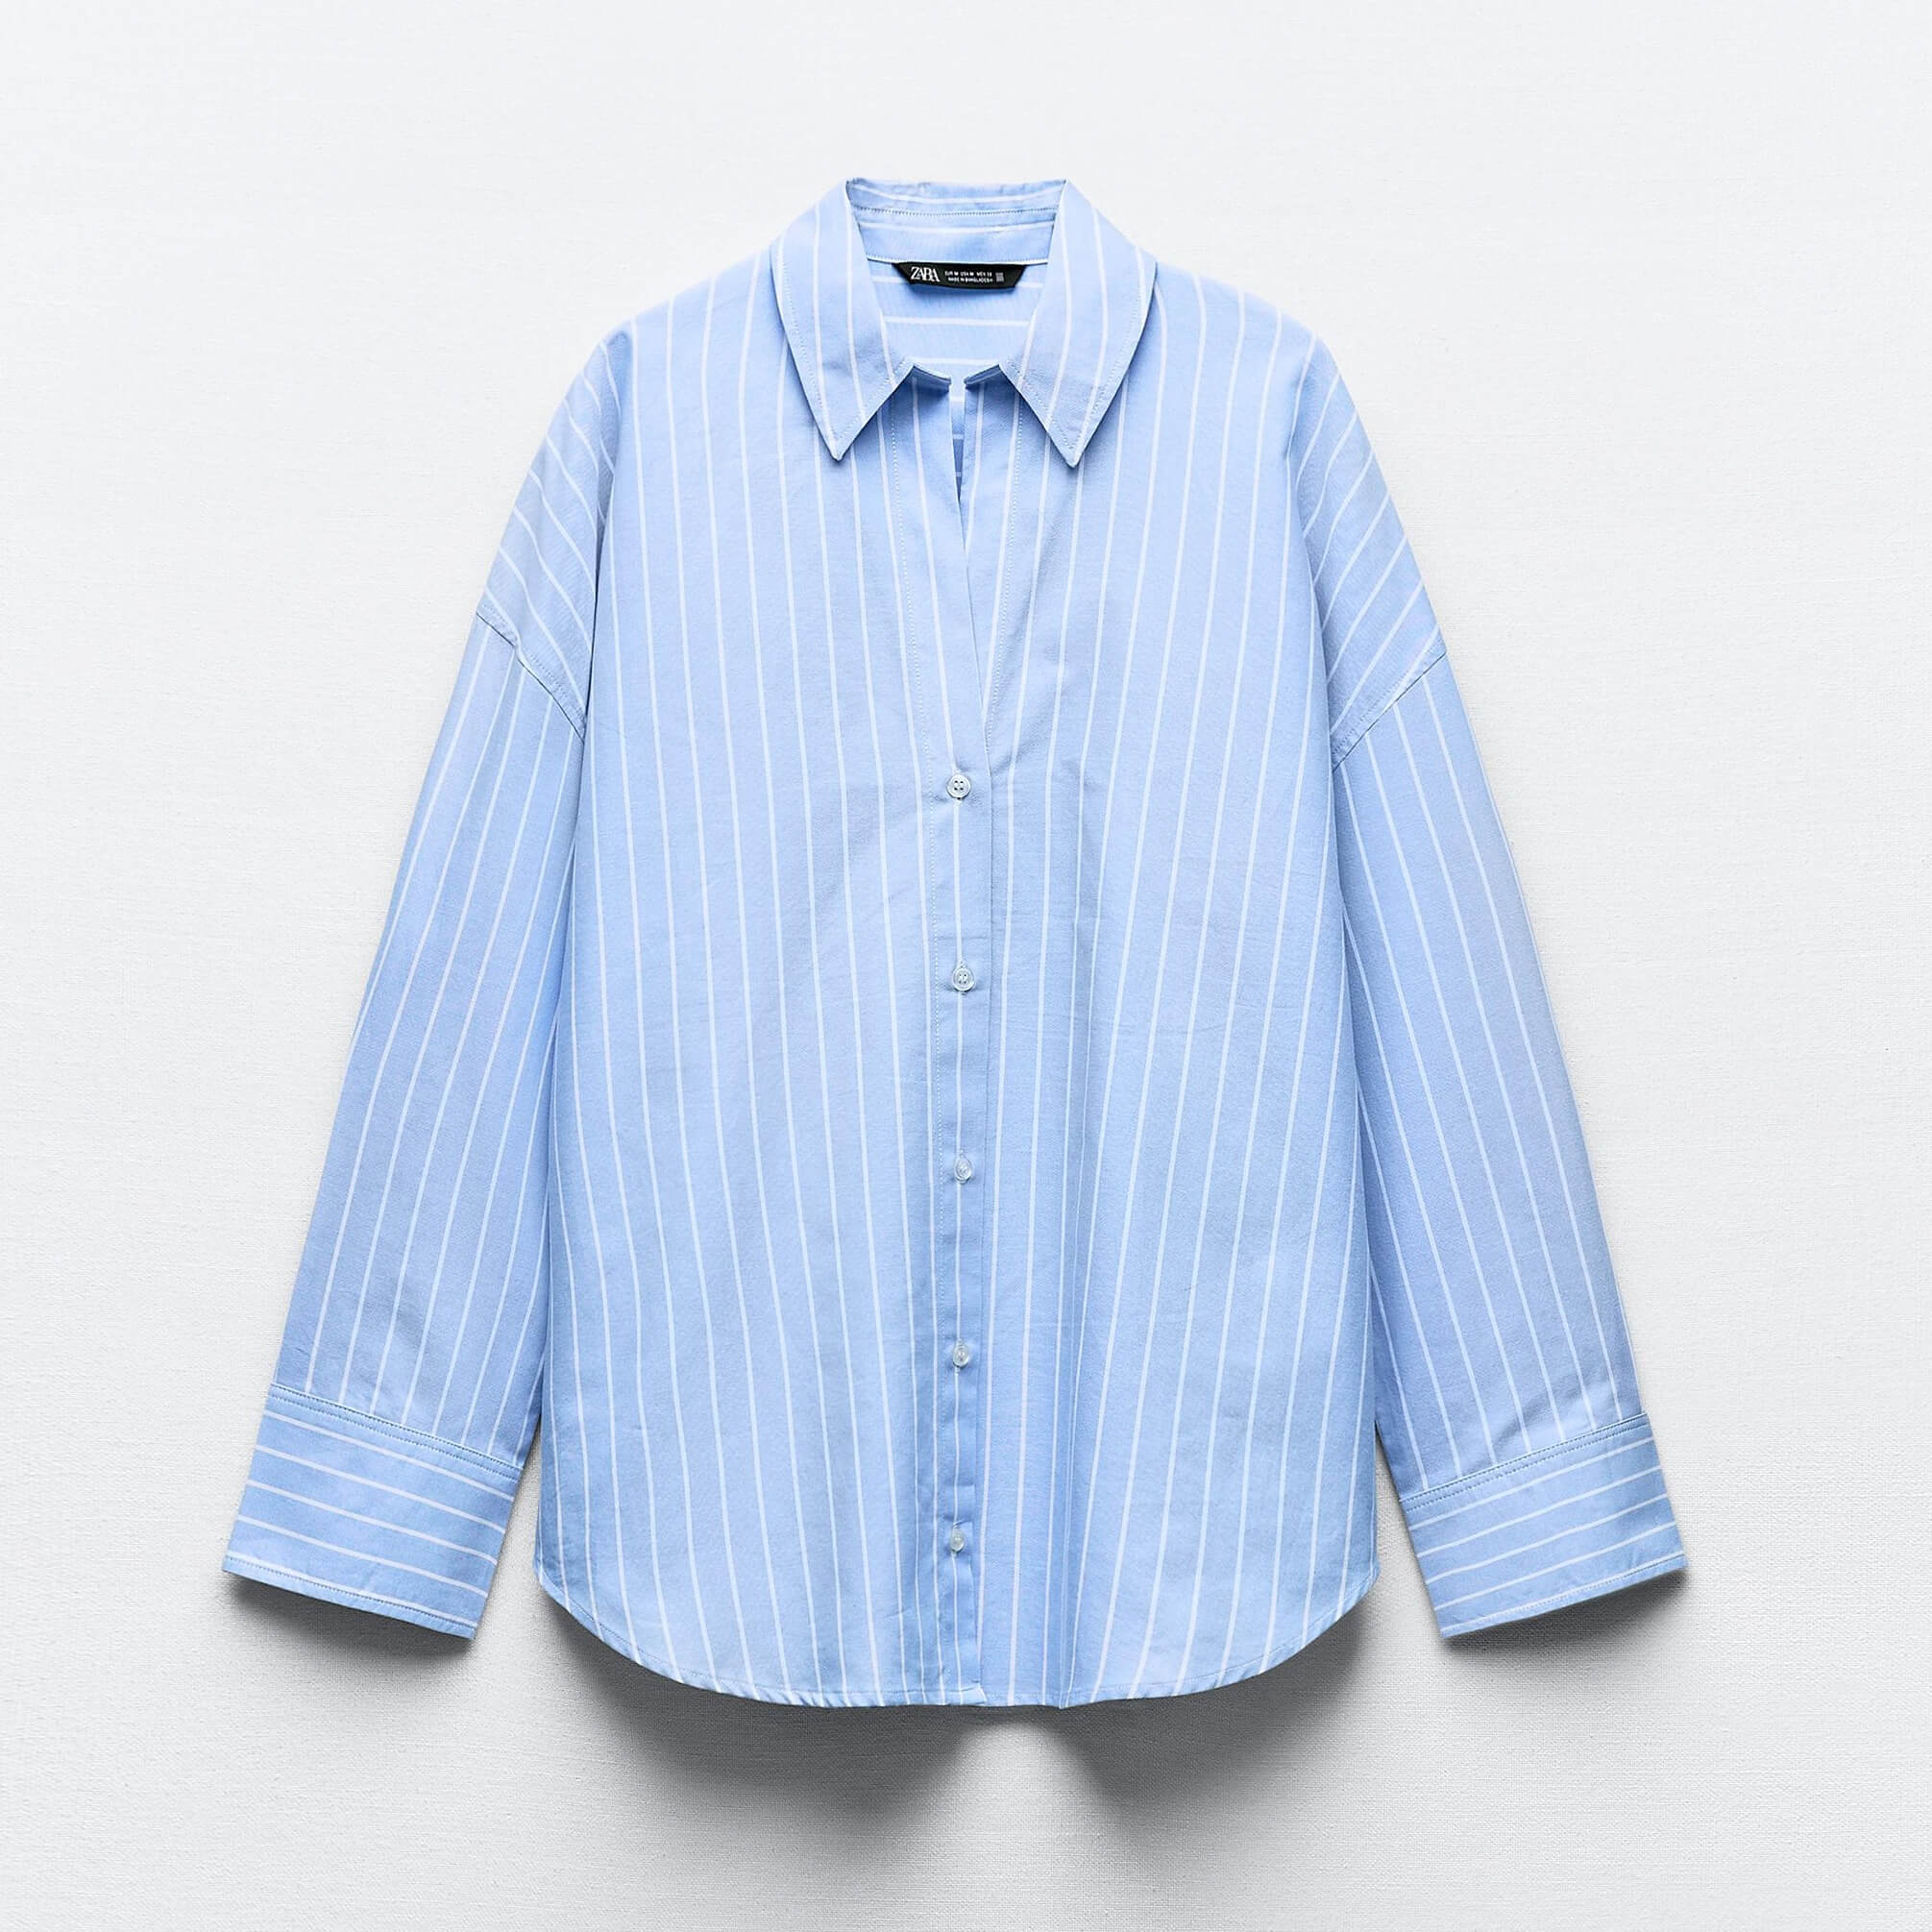 Рубашка Zara Striped Oxford, голубой/белый рубашка zara striped shirt голубой желтовато белый